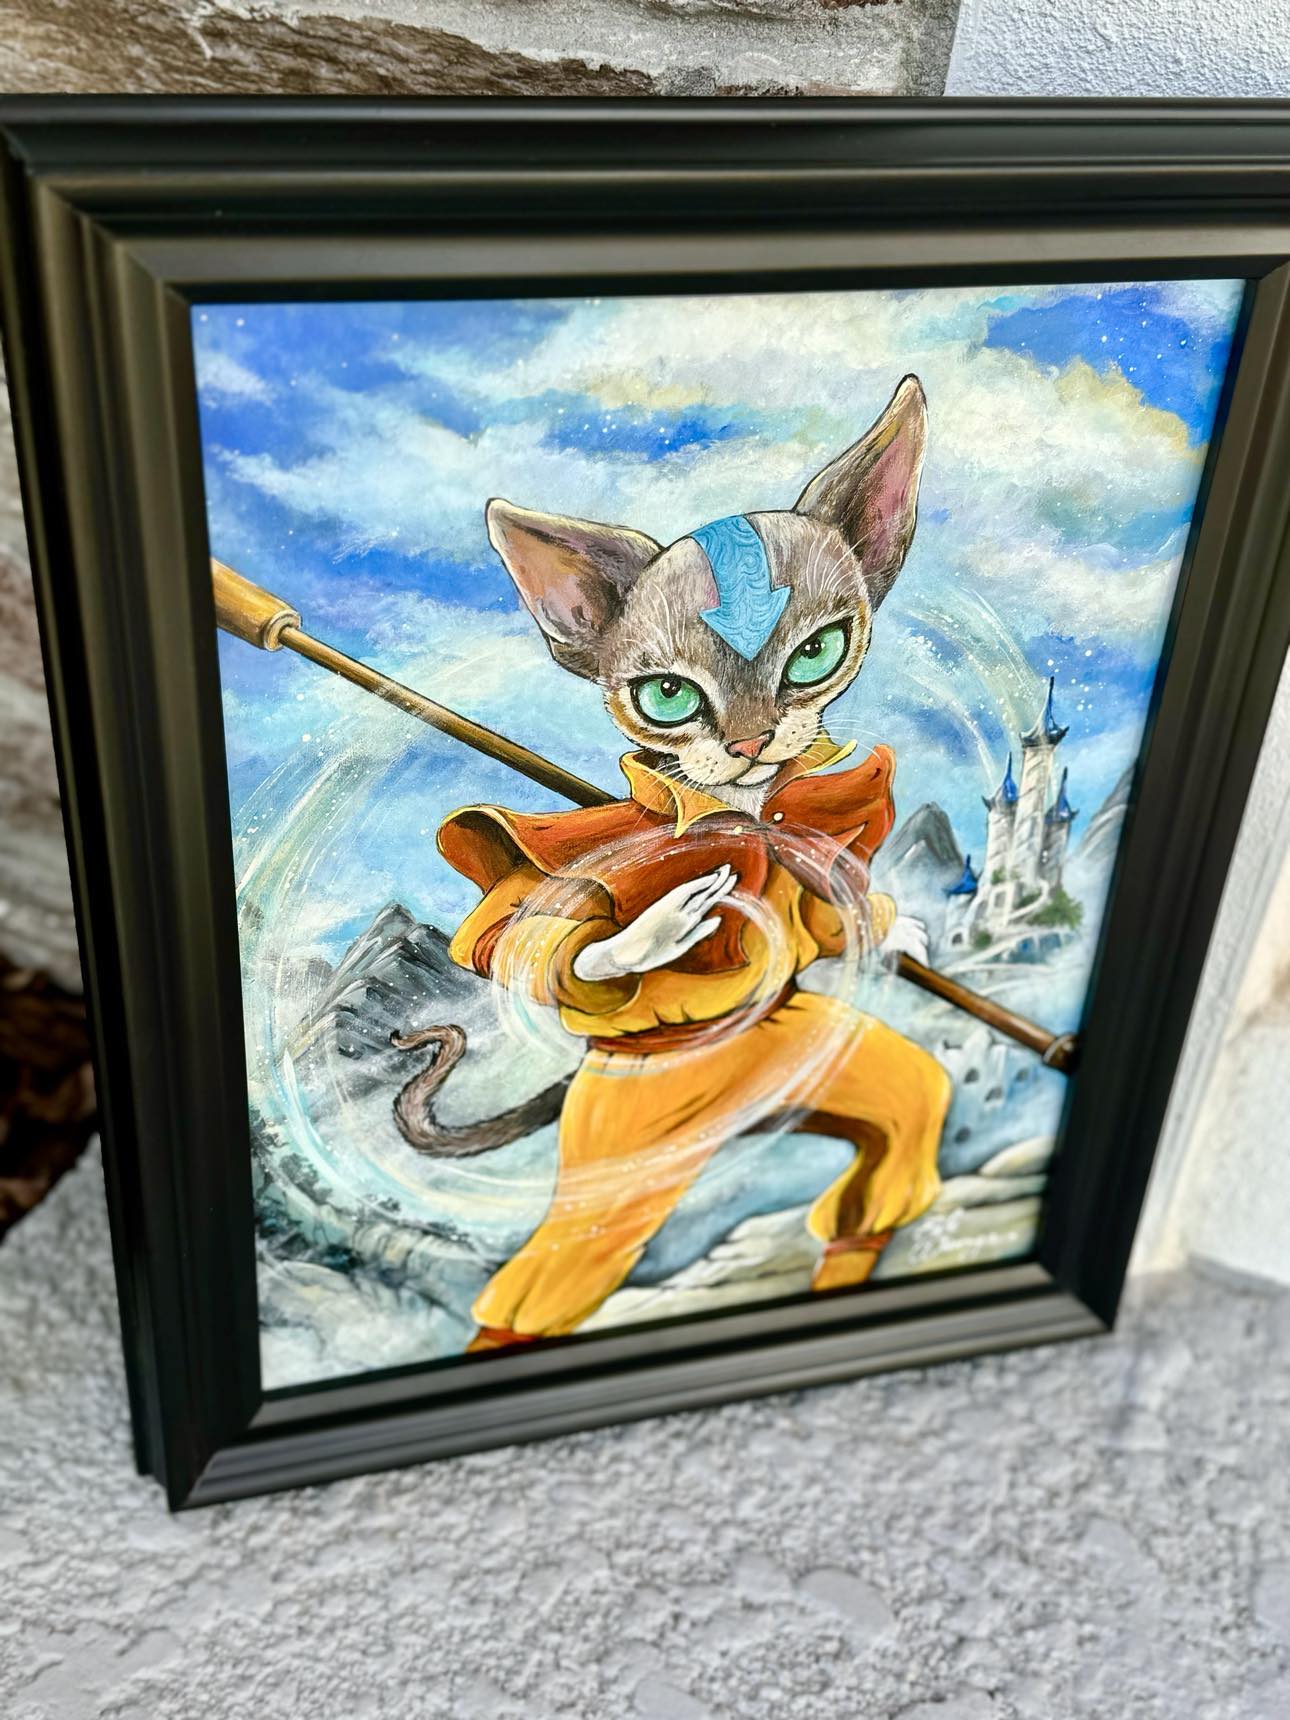 Original Painting "Kitty Aang"